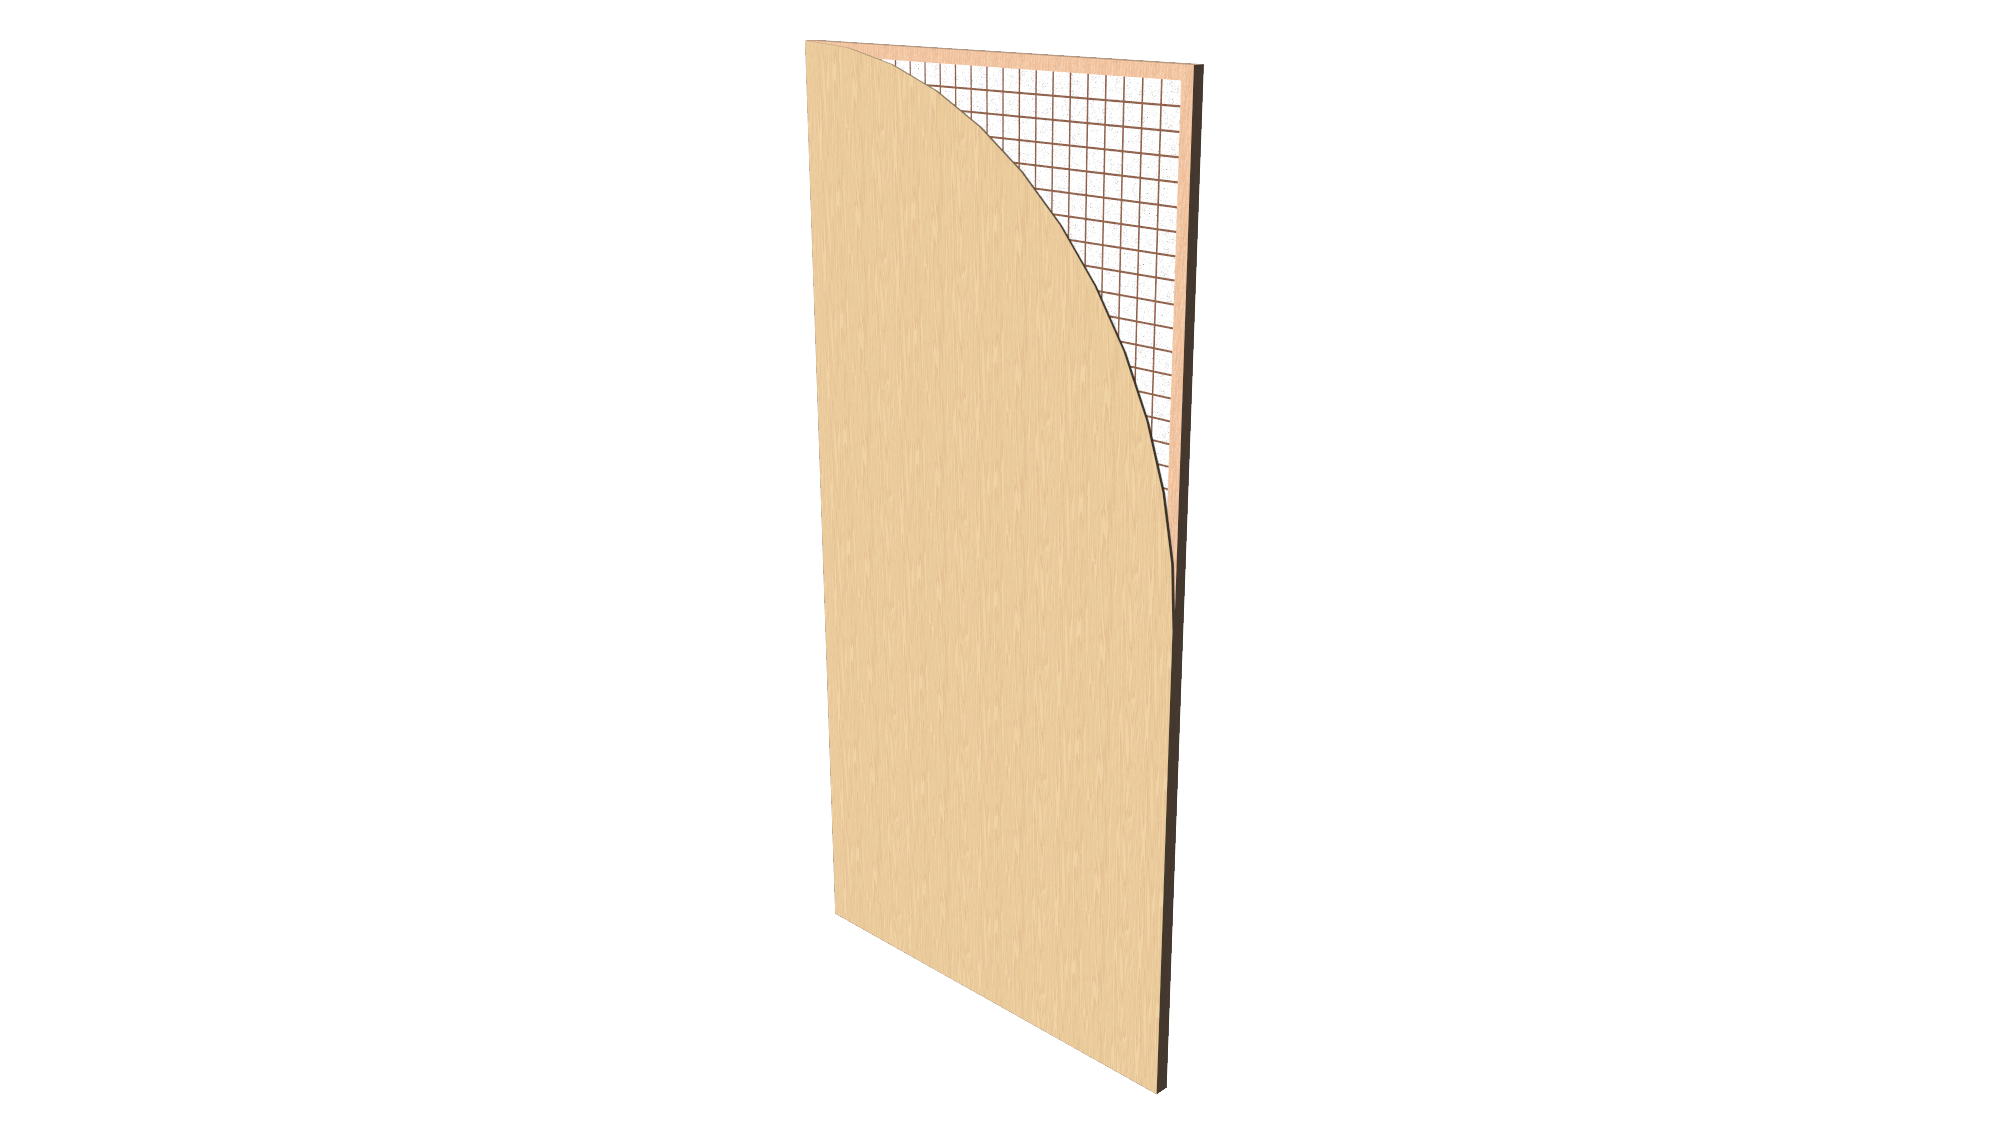 8' x 4' x 1.5" Standard Panel || Birch Skin and Edging || Small (2" x 2") Torsion Box